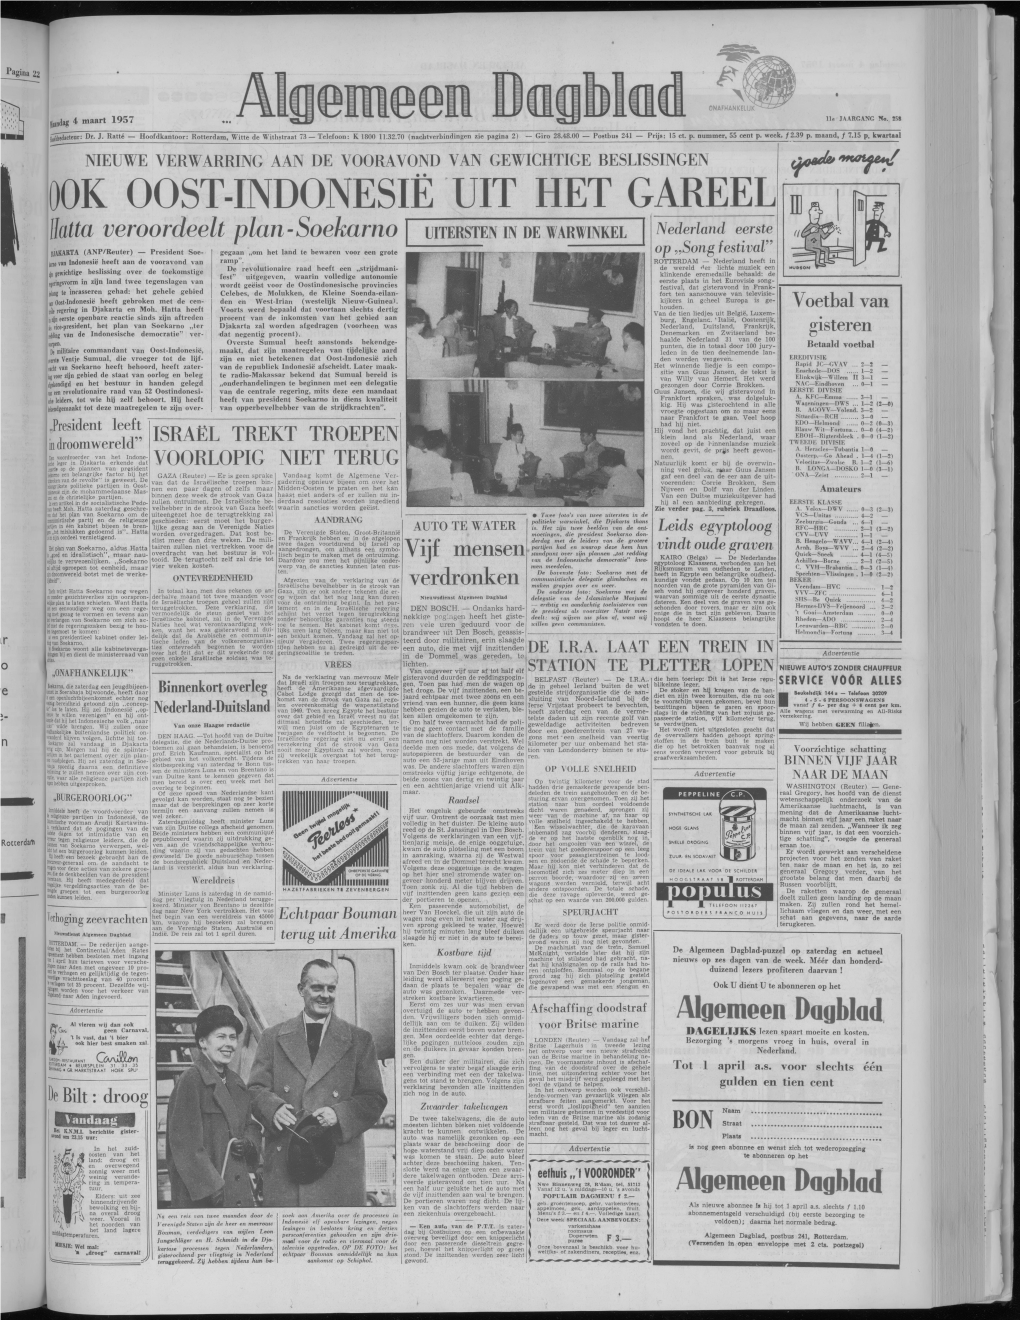 Algemeen Dagblad, Jrg. 11, Nummer 258, 04-03-1957, Editie Dag, KB C